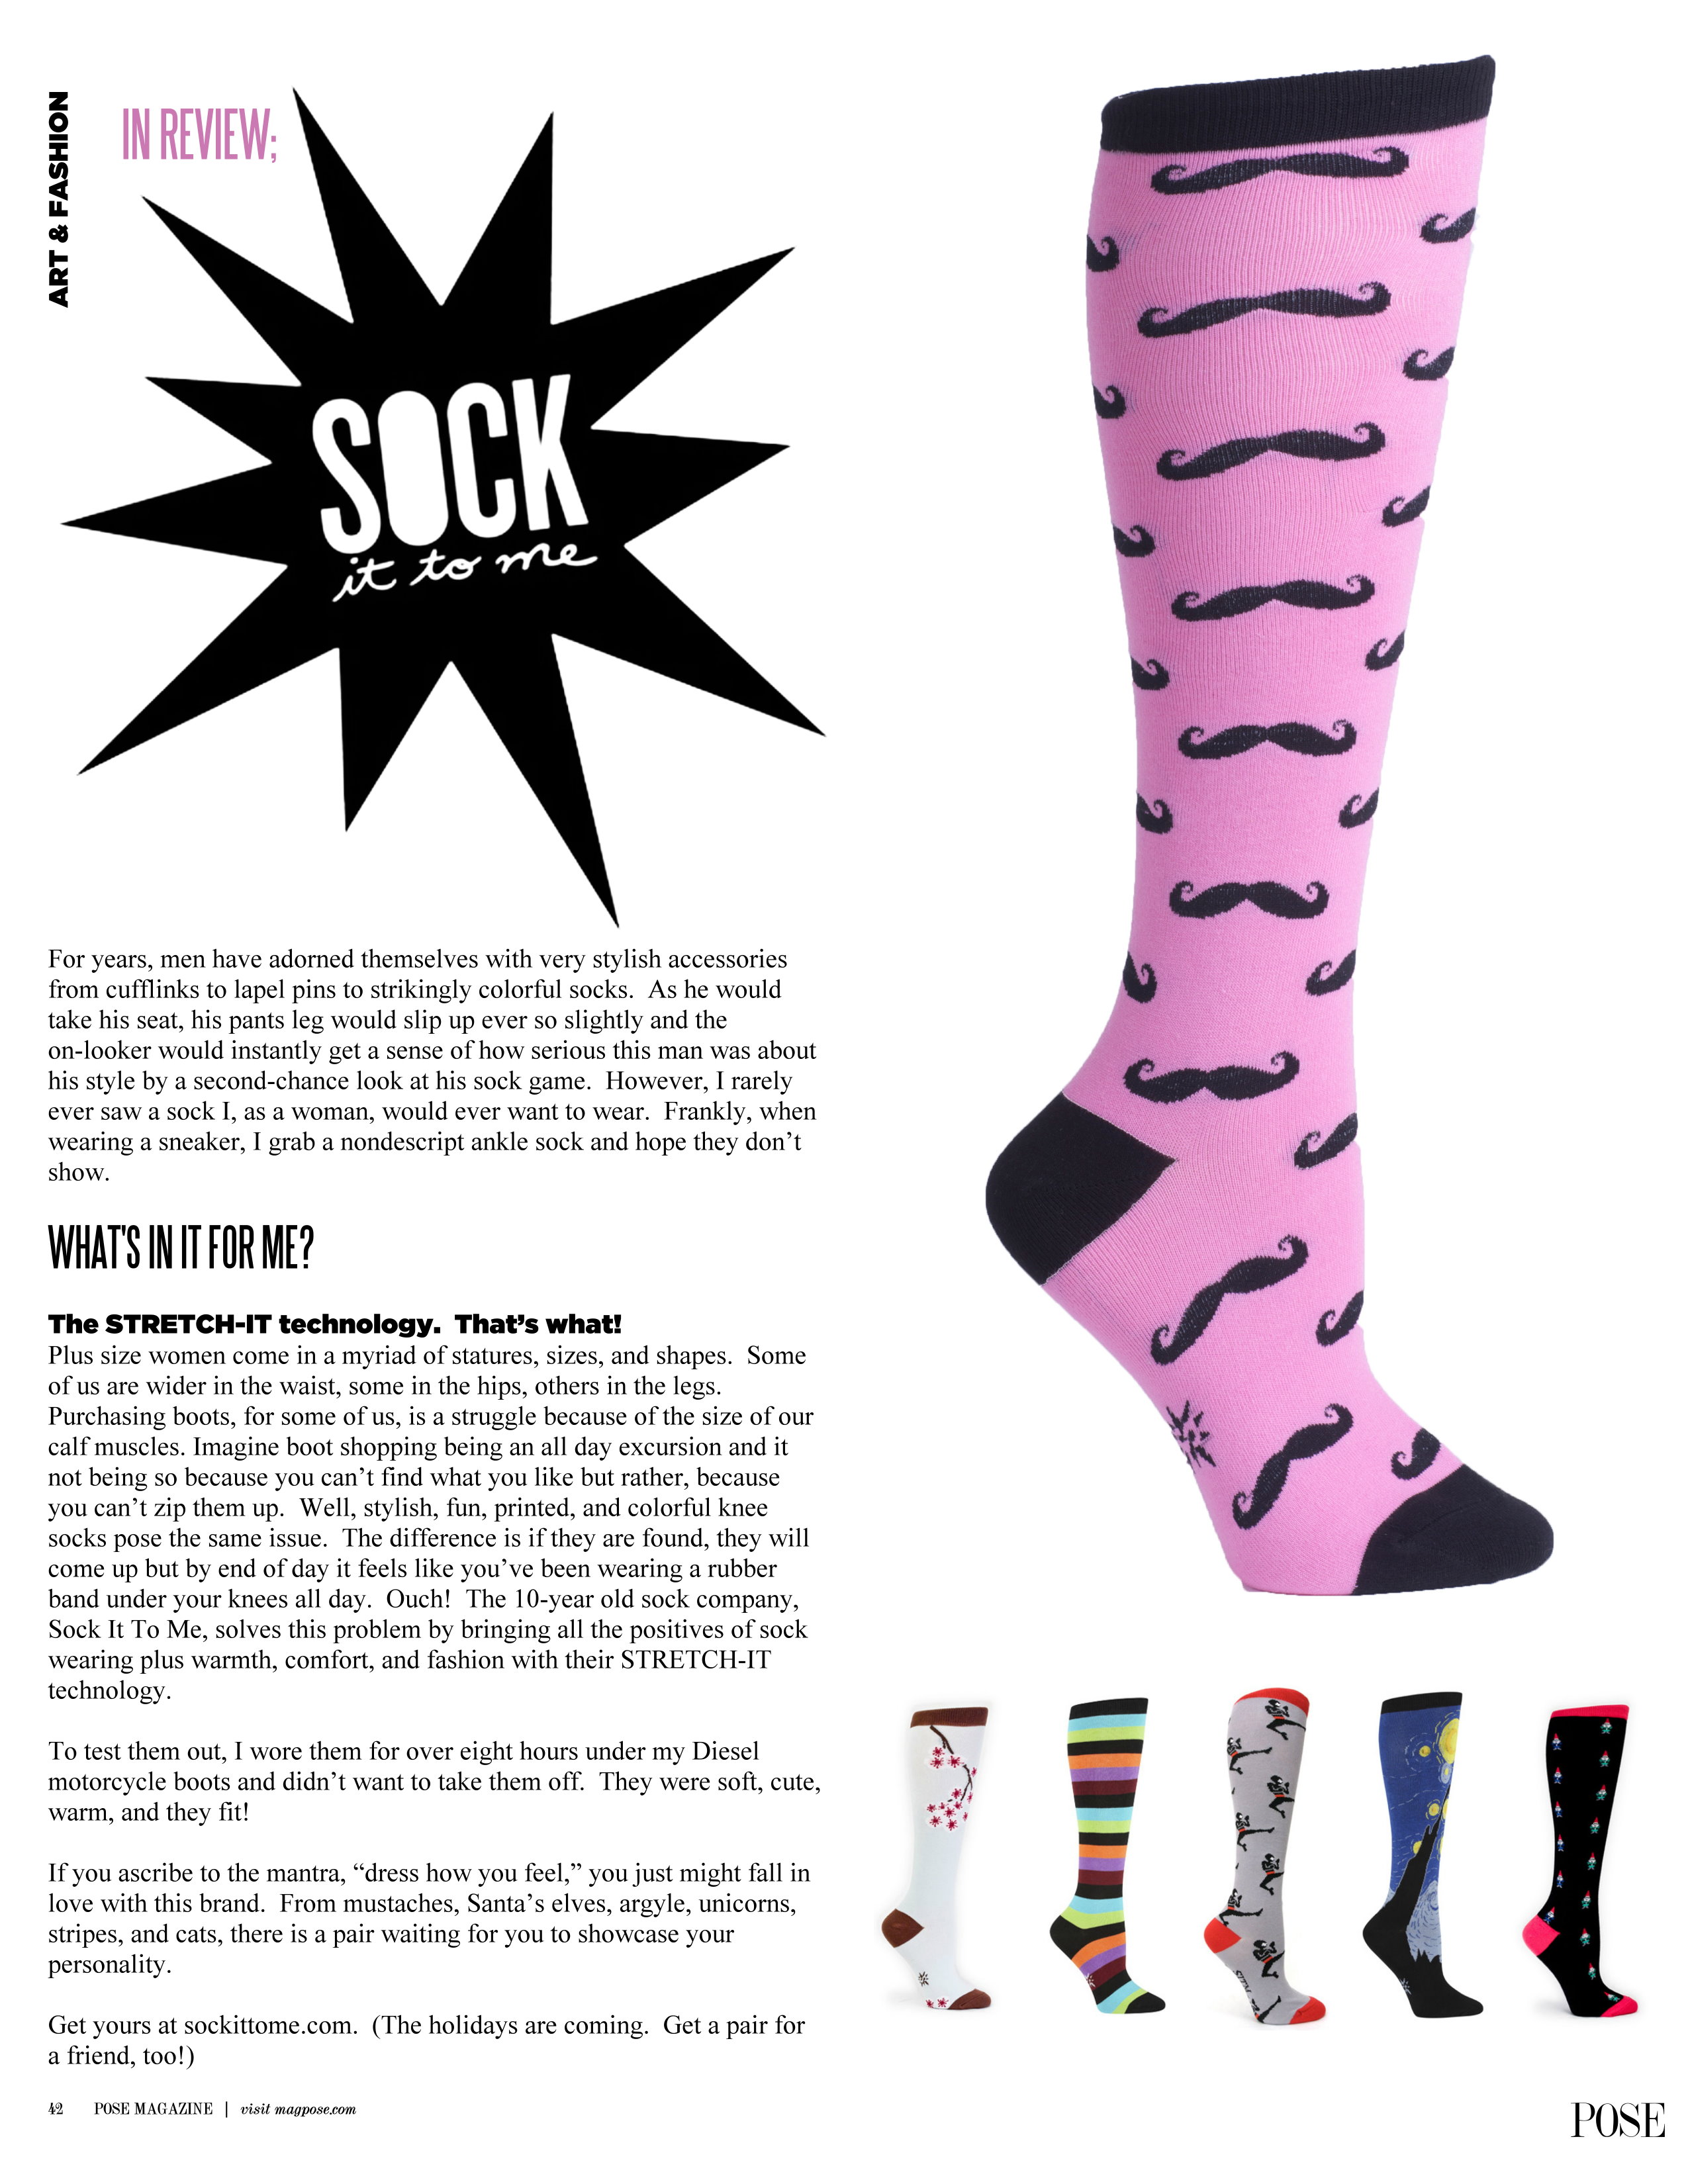 POSE Magazine November Issue_Sock It to Me